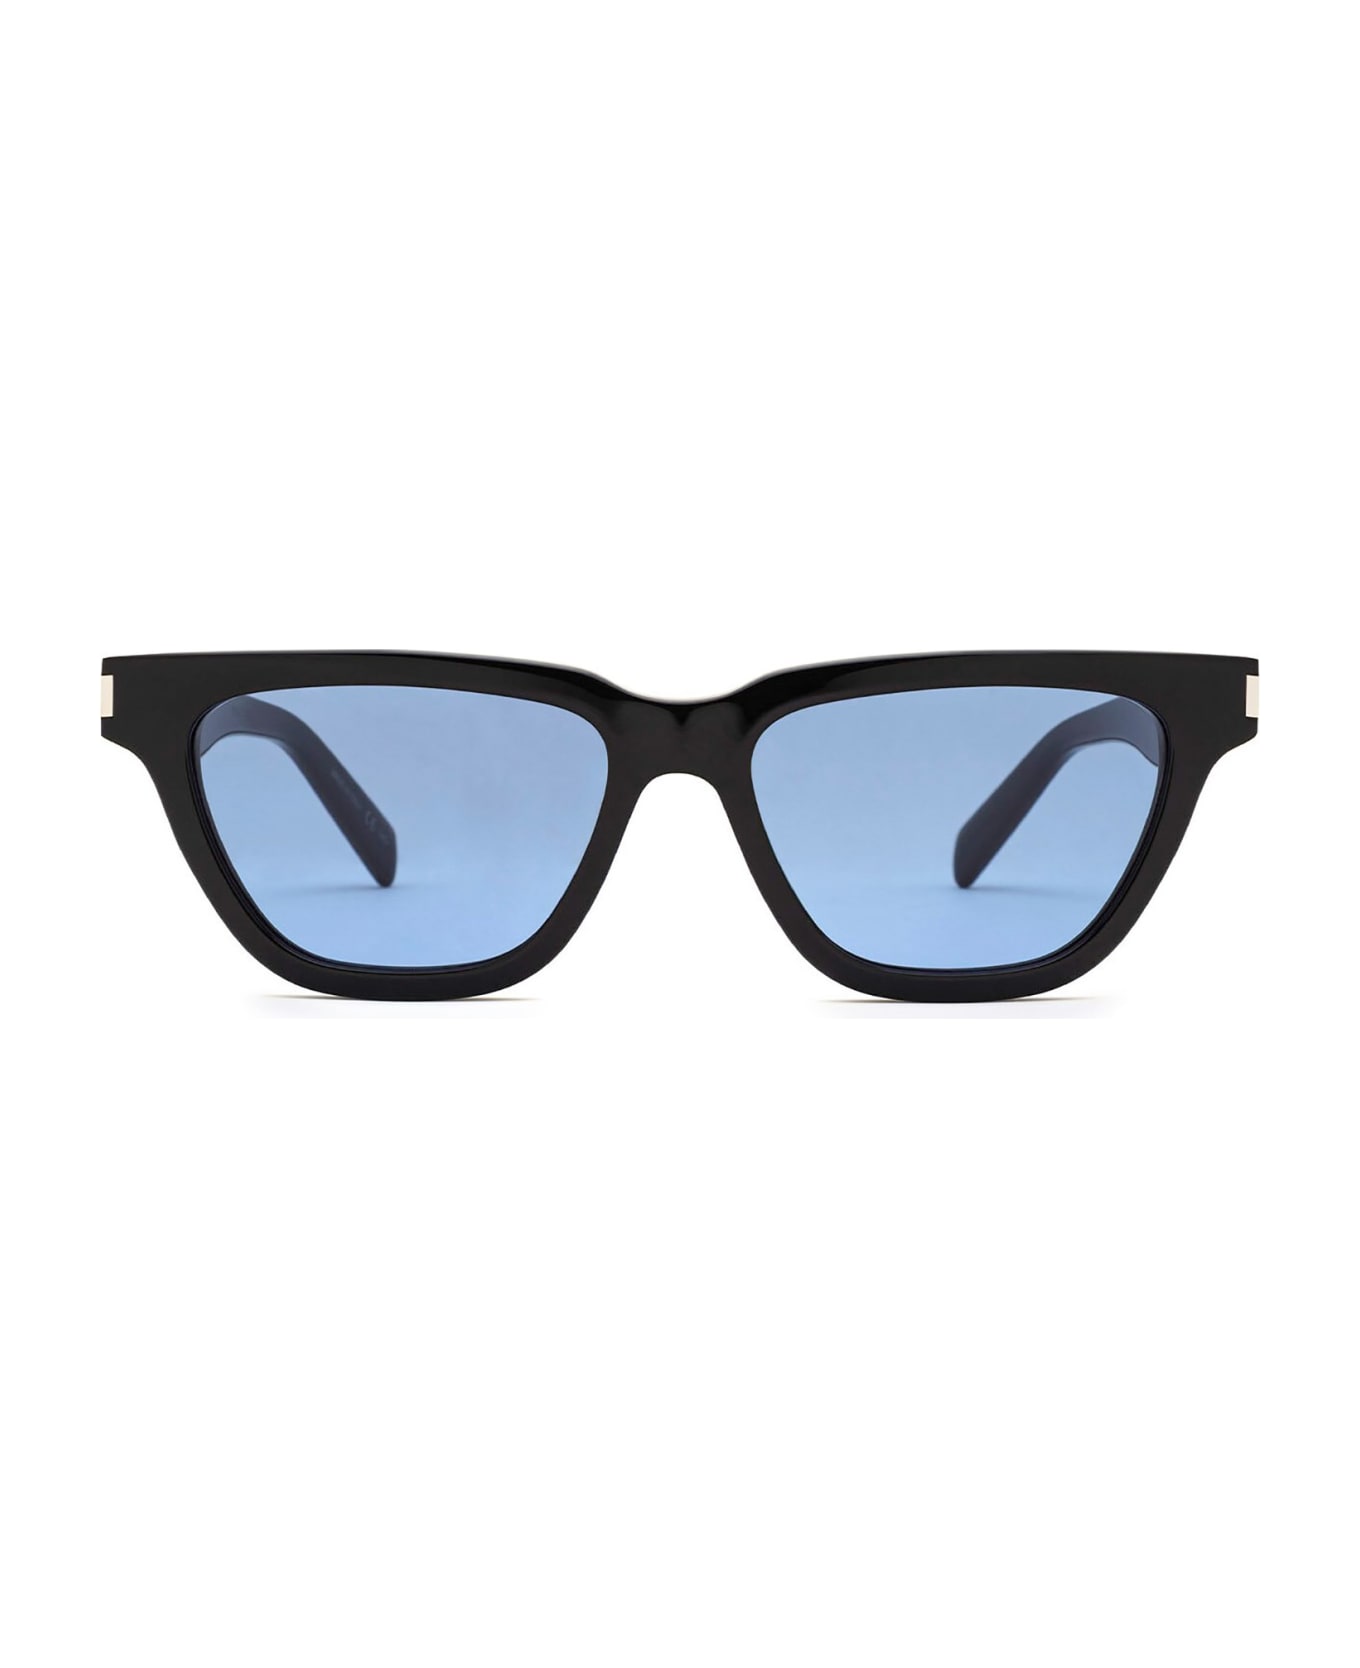 Saint Laurent Eyewear 18mk43l0a - Black Black Blue